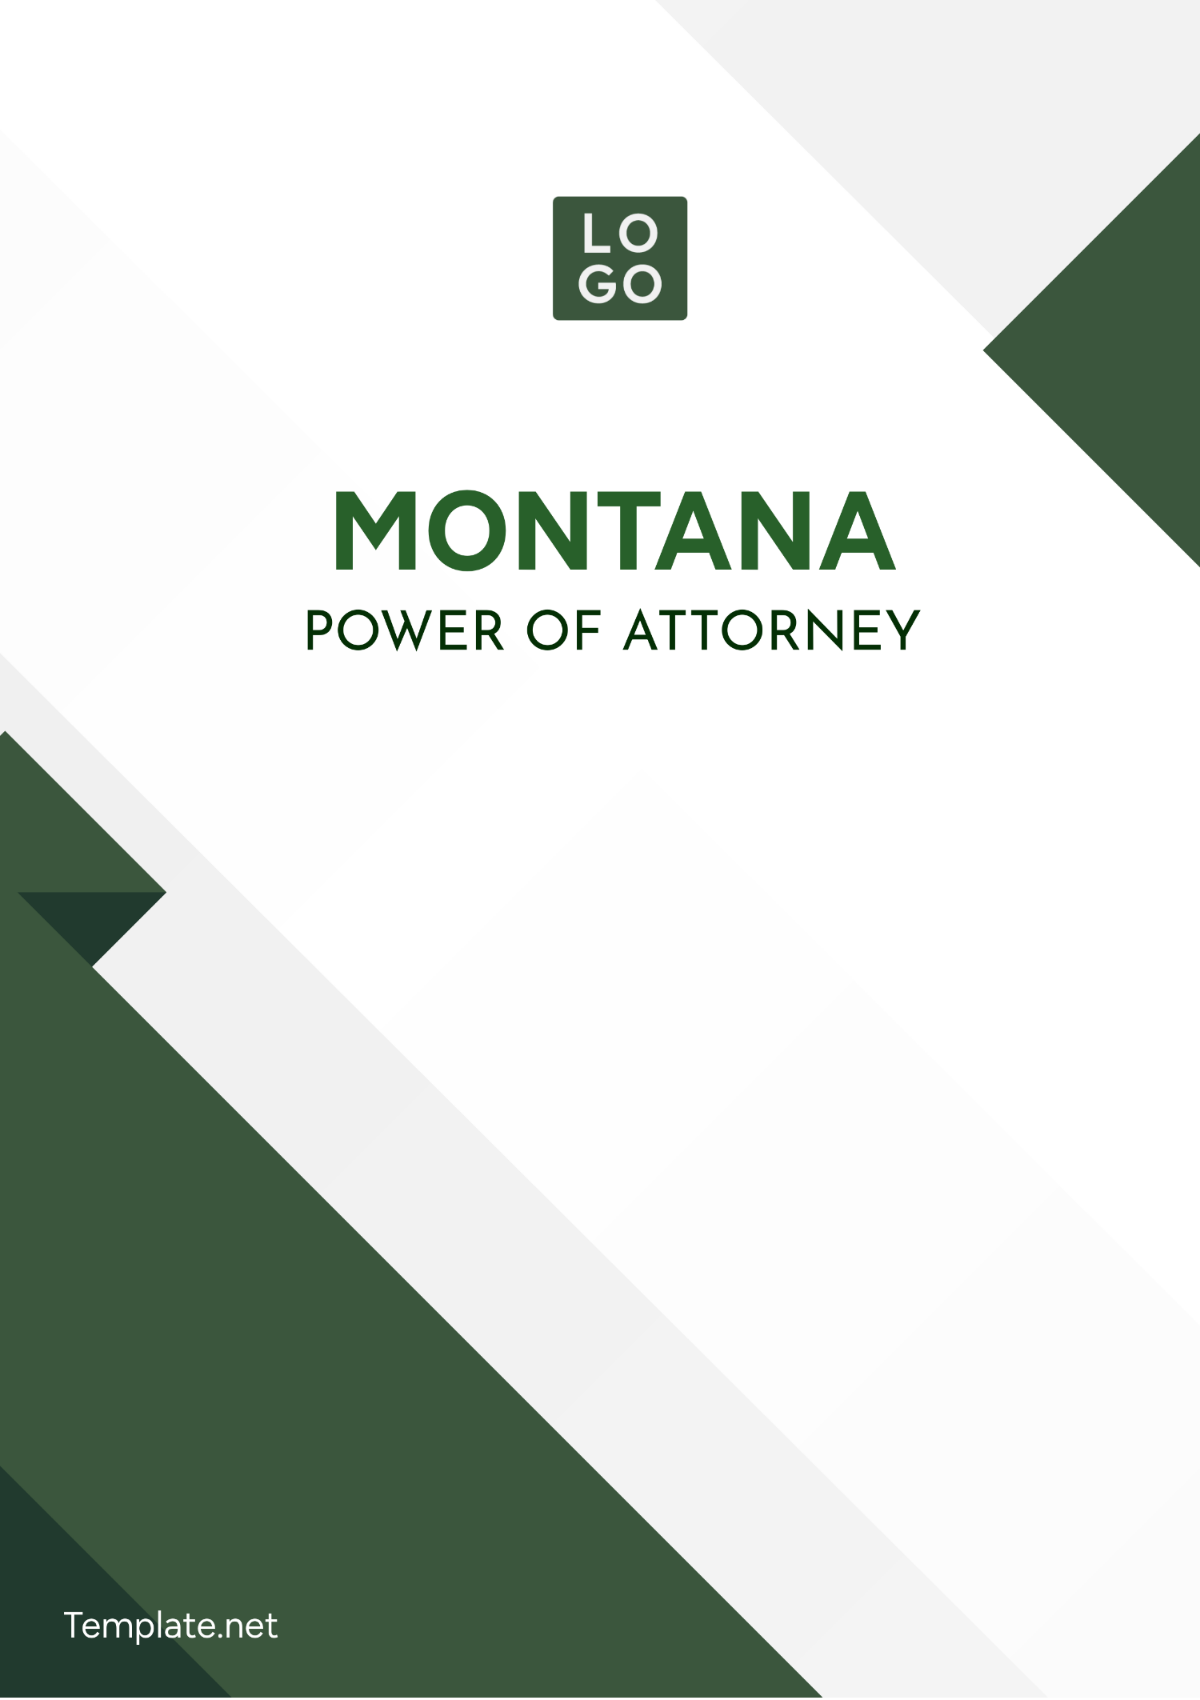 Montana Power of Attorney Template